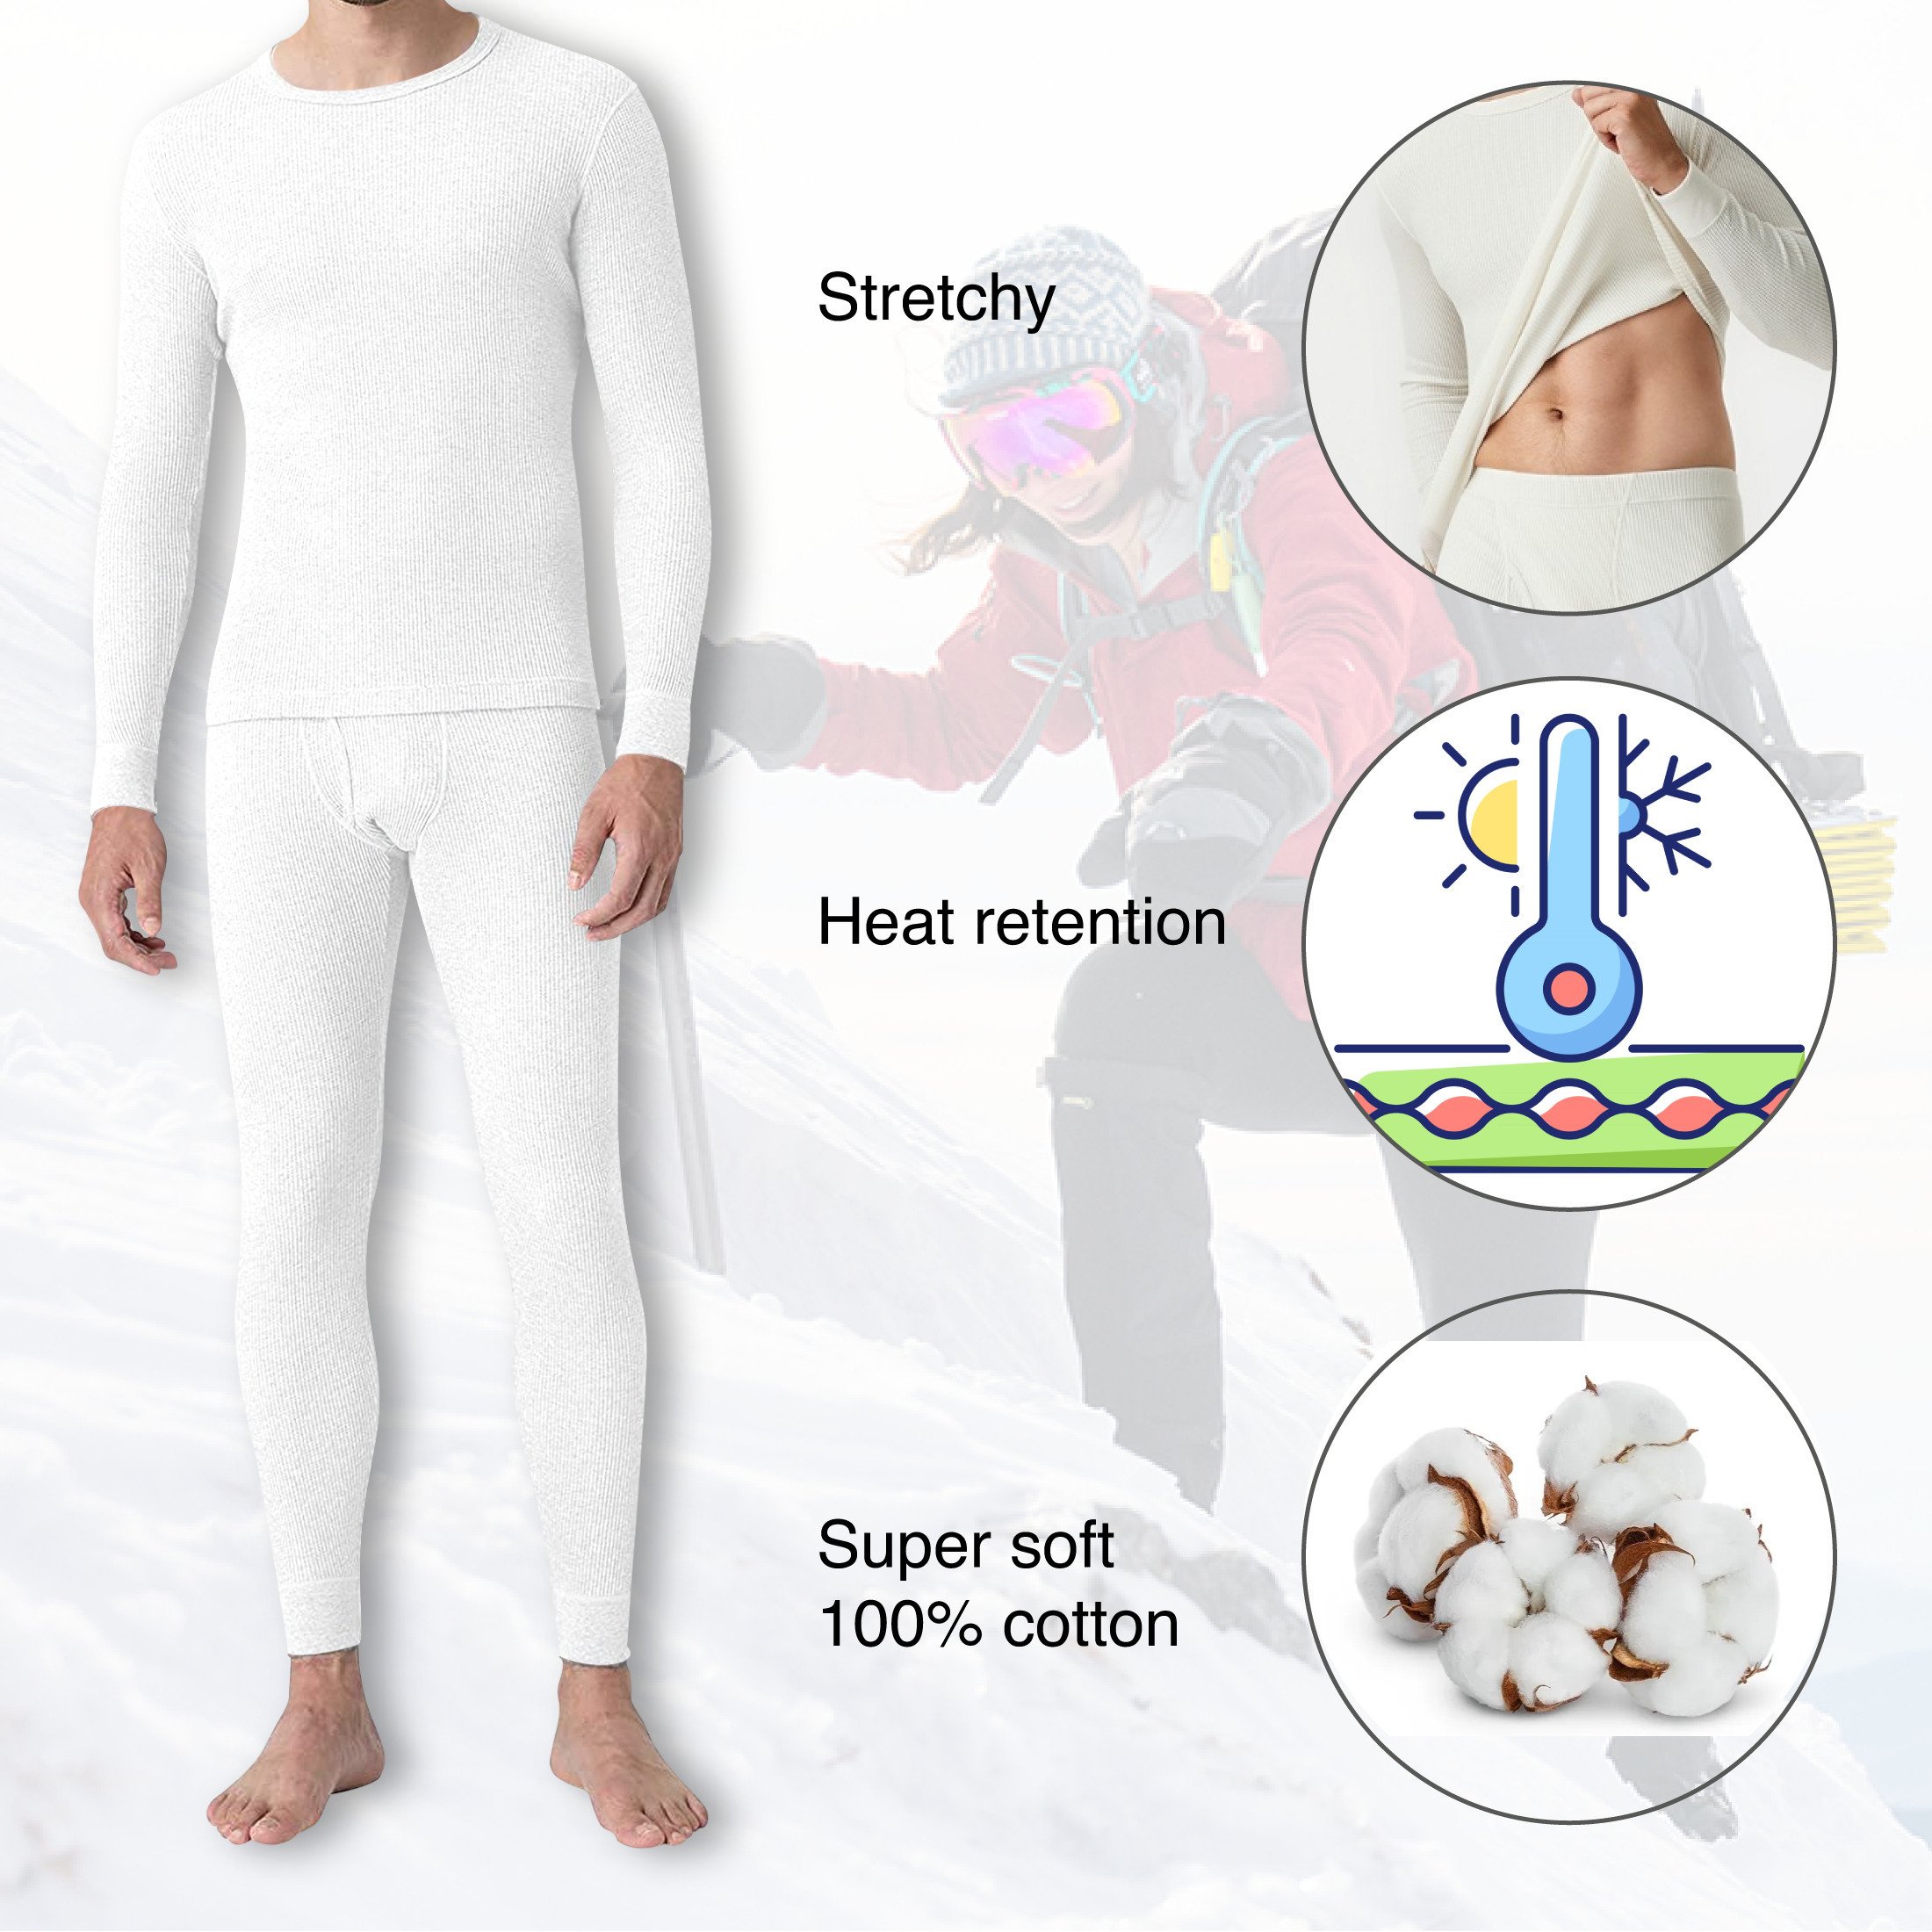 2-Sets: Men's Super Soft Cotton Waffle Knit Winter Thermal Underwear Set - White & White, Medium